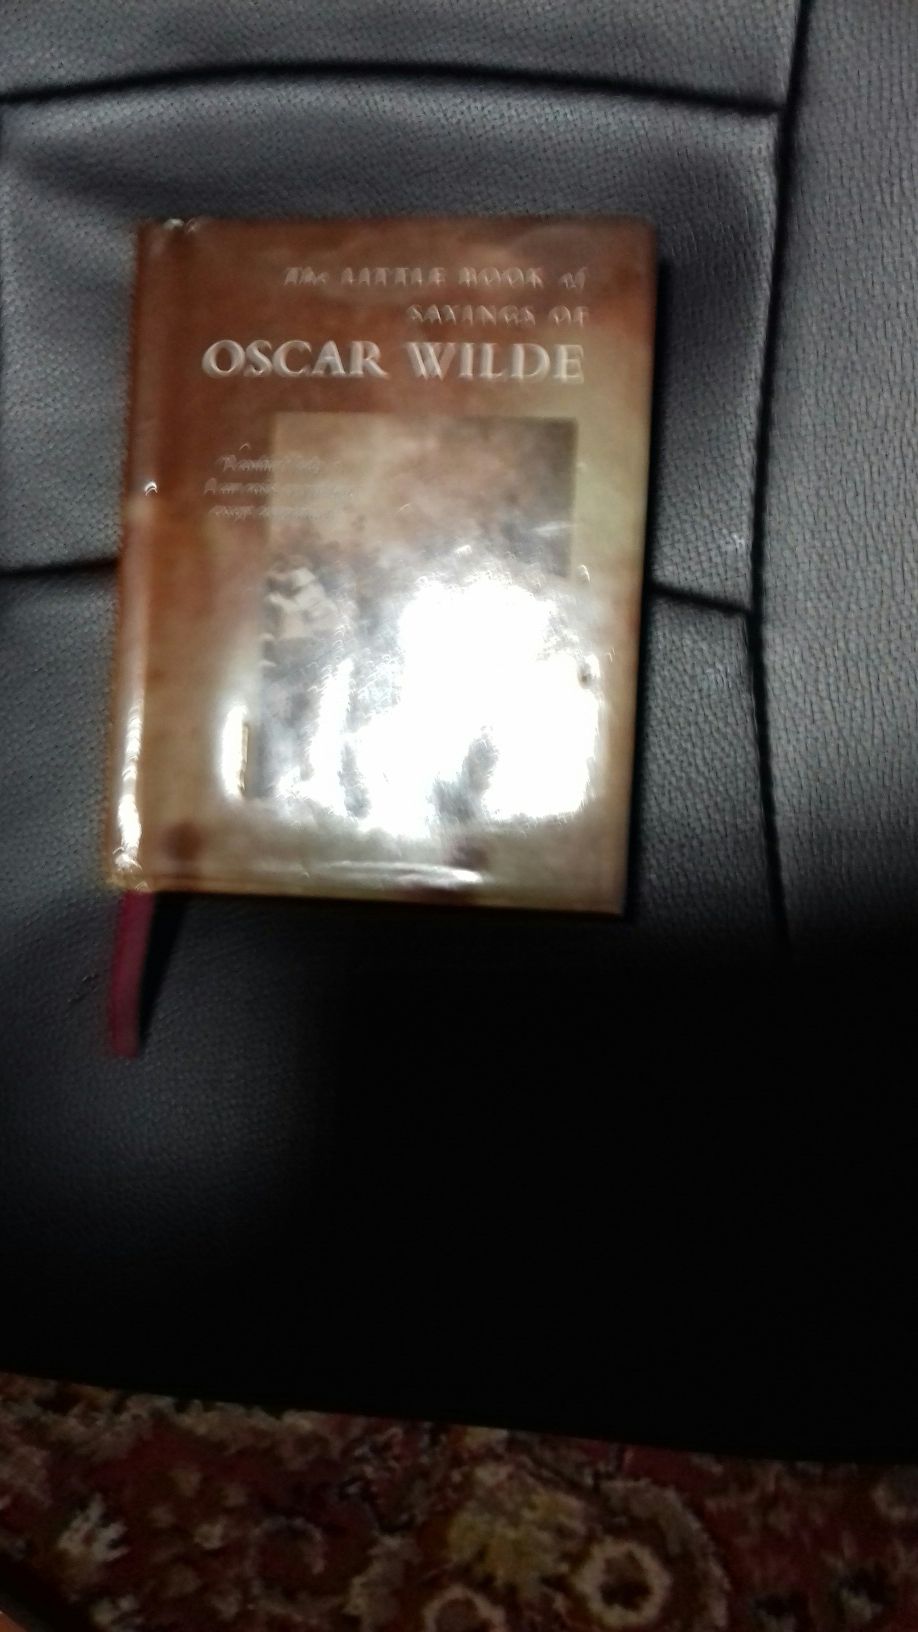 Little book of sayings Oscar Wilde